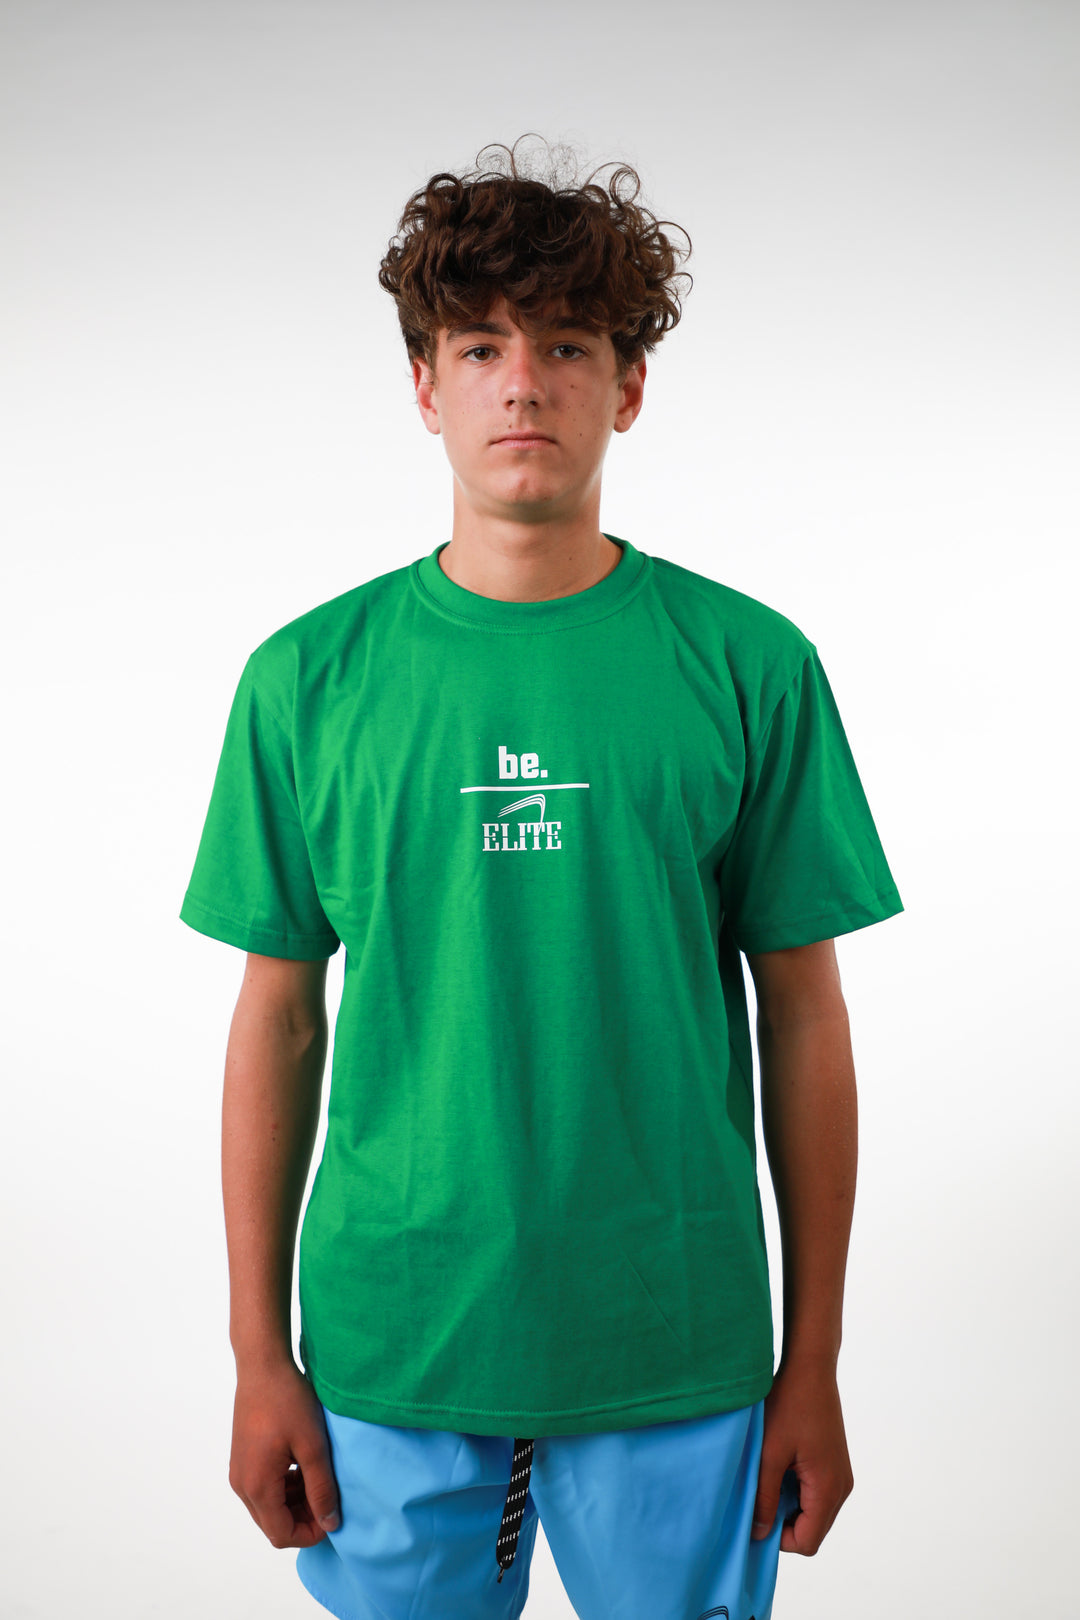 Elite - Shirt - Green